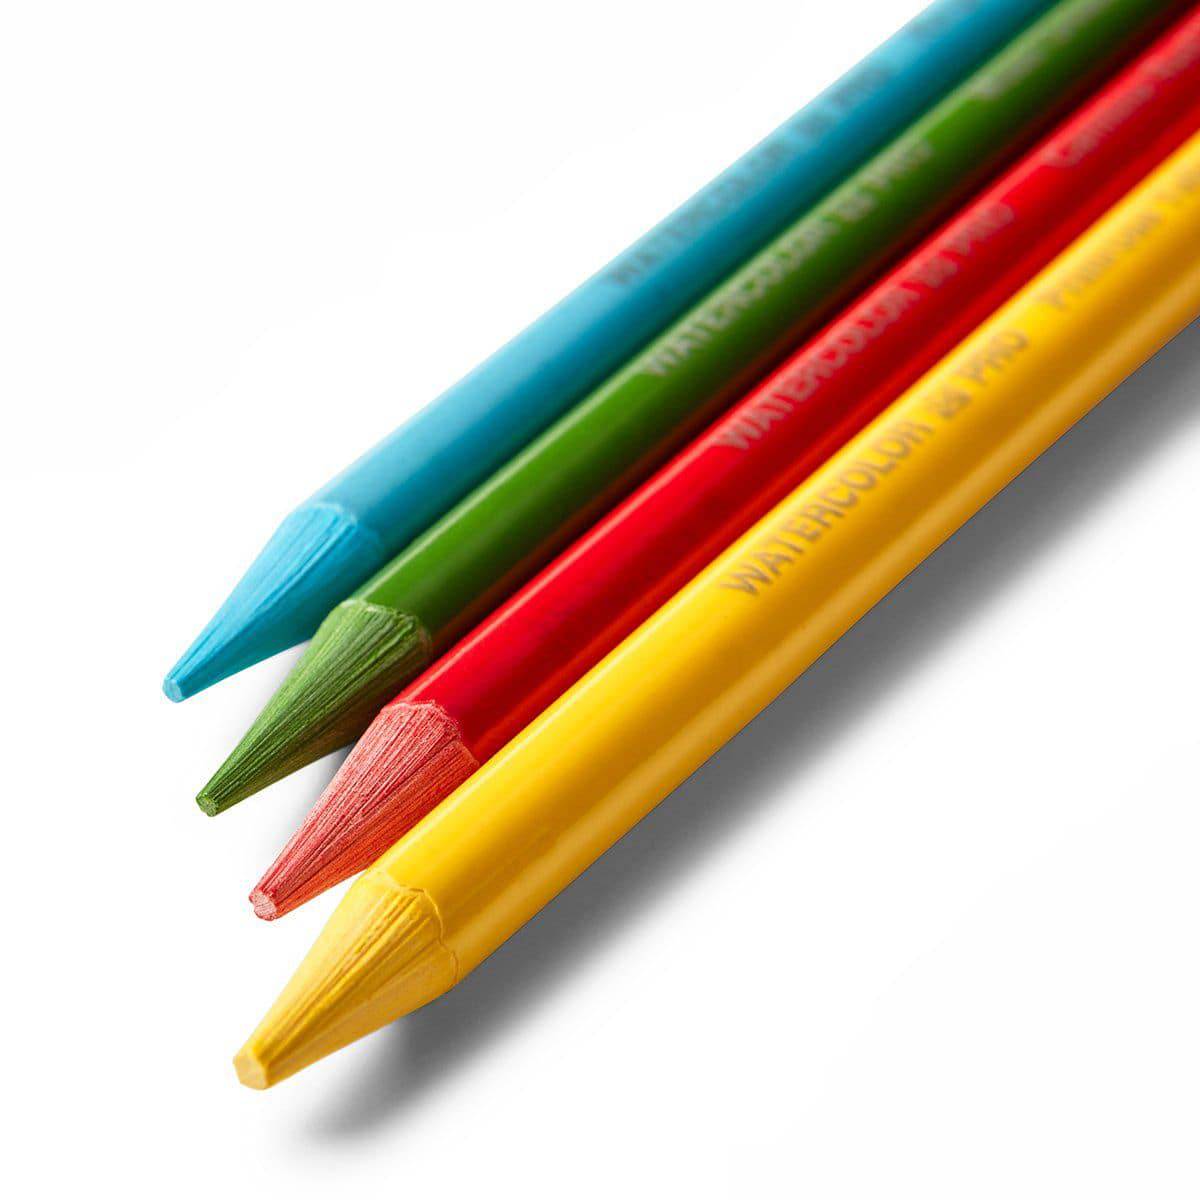 Kingart Colored Pencils